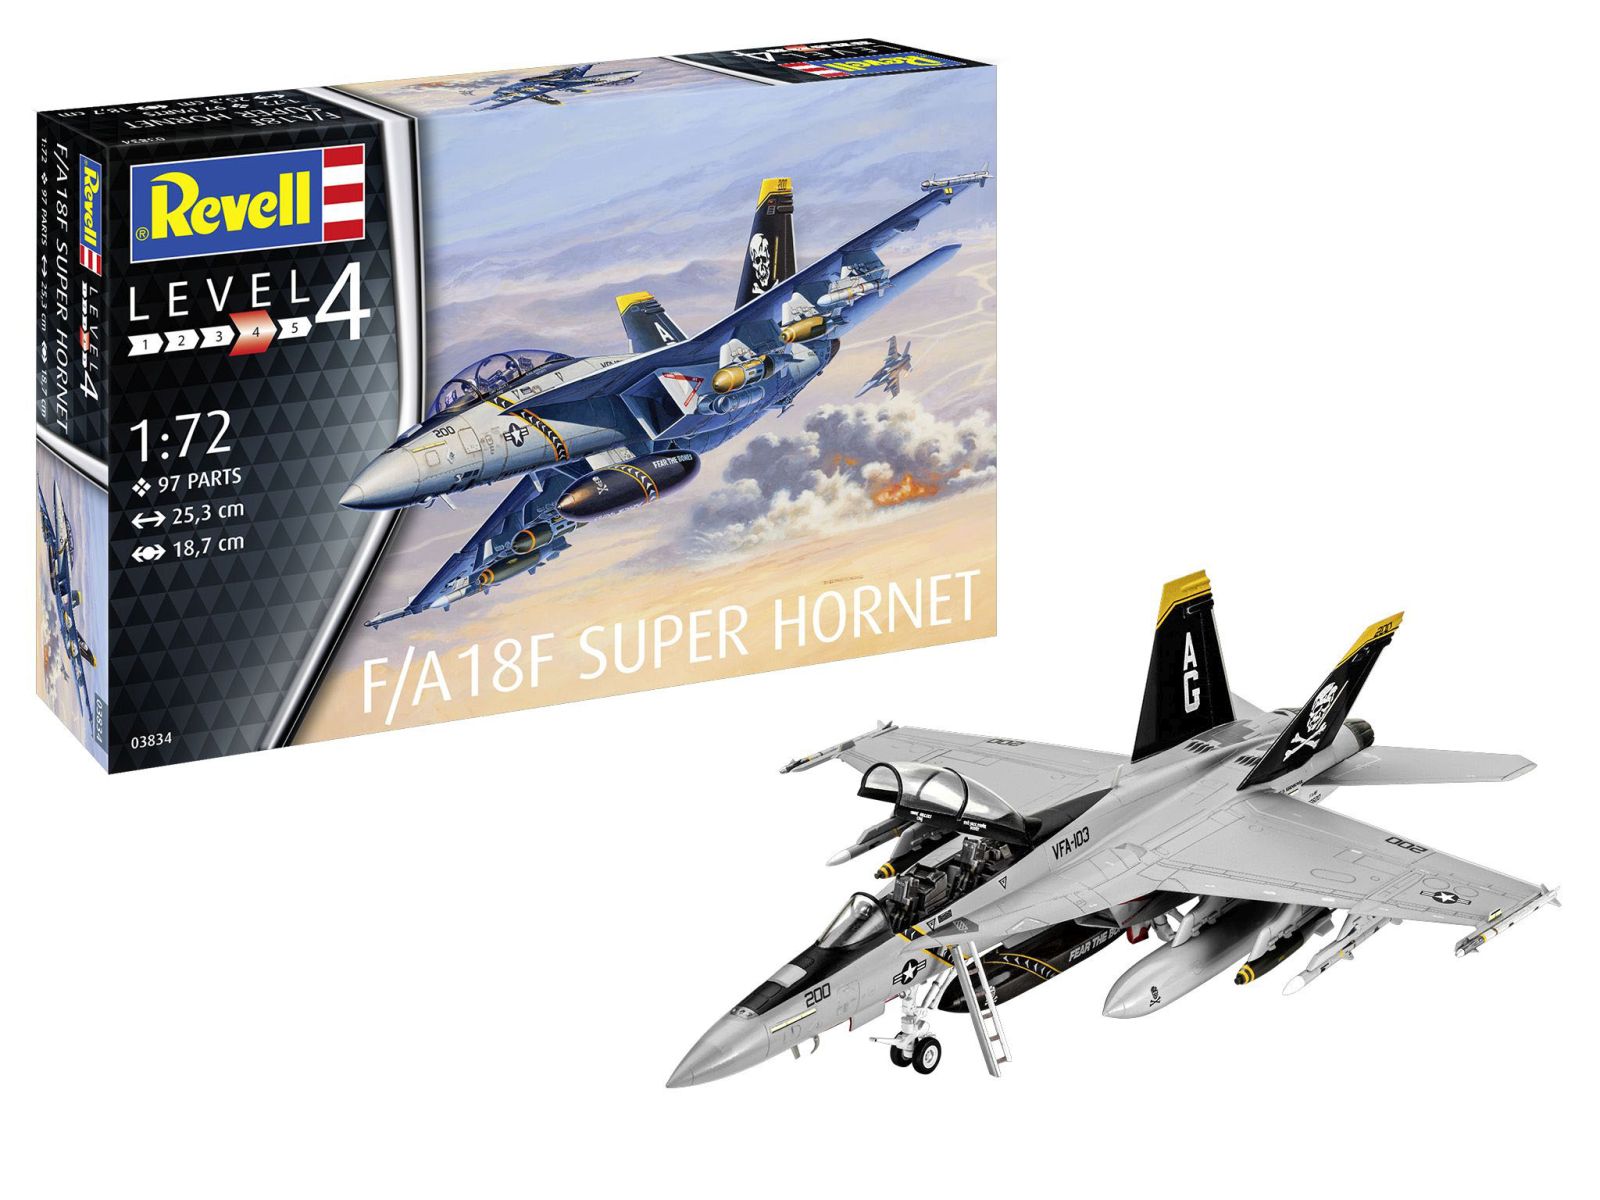 Revell 03834 - F/A-18F Super Hornet